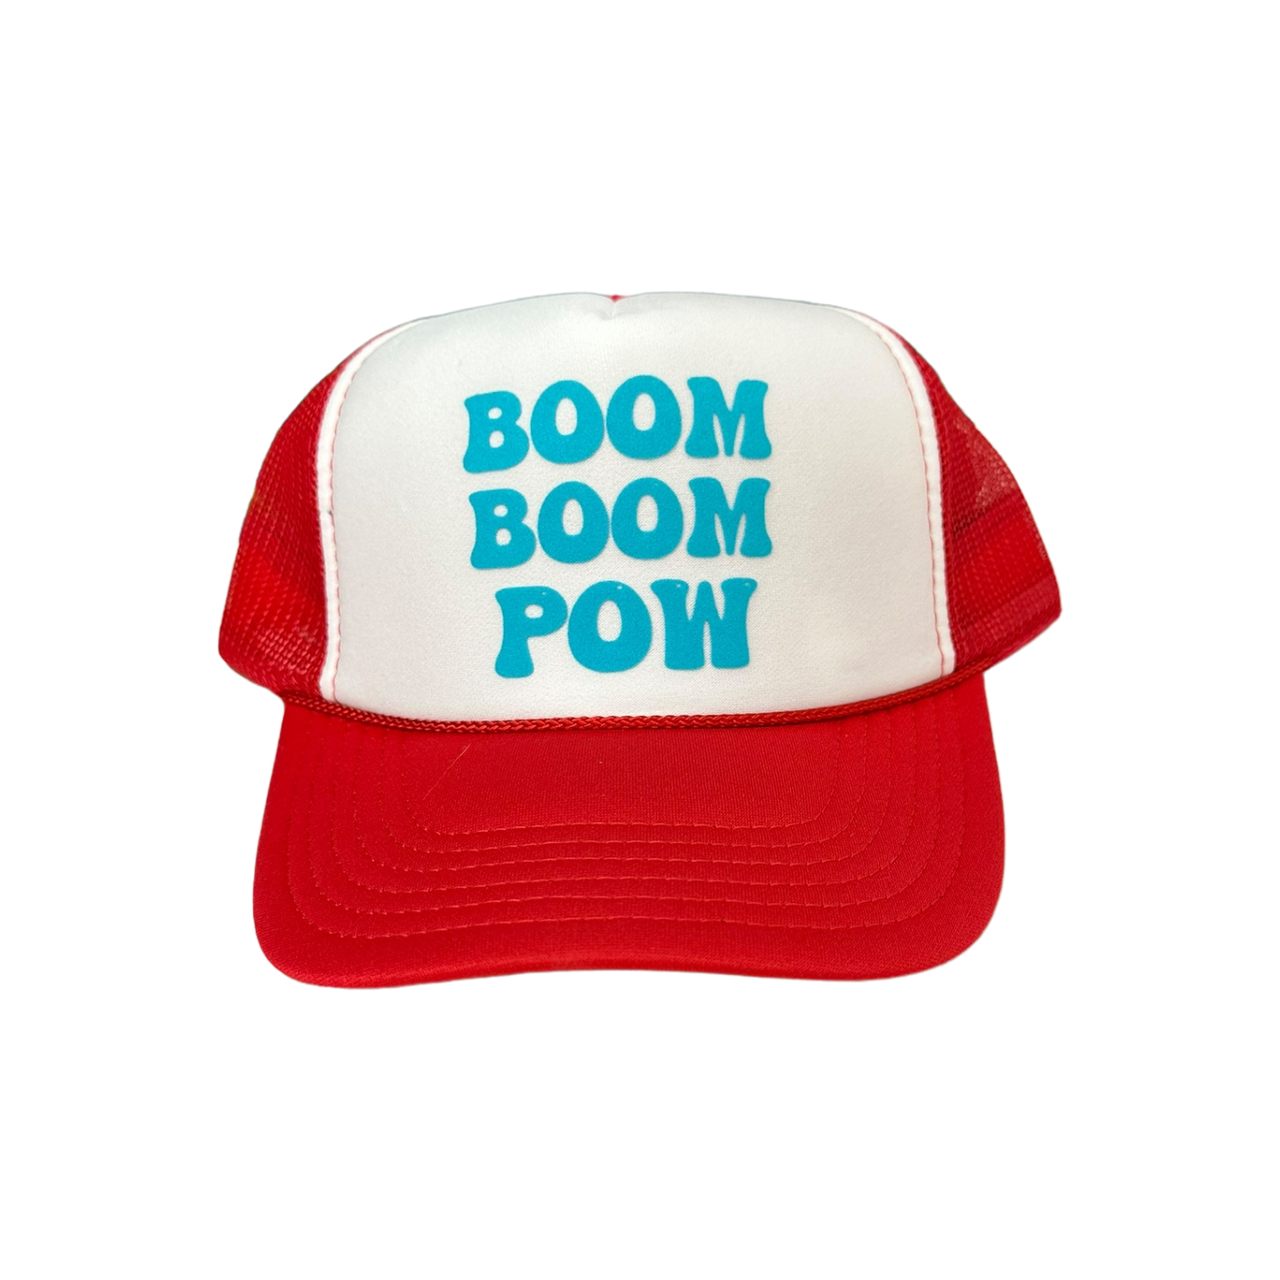 Boom Boom Pow - Red/White Trucker